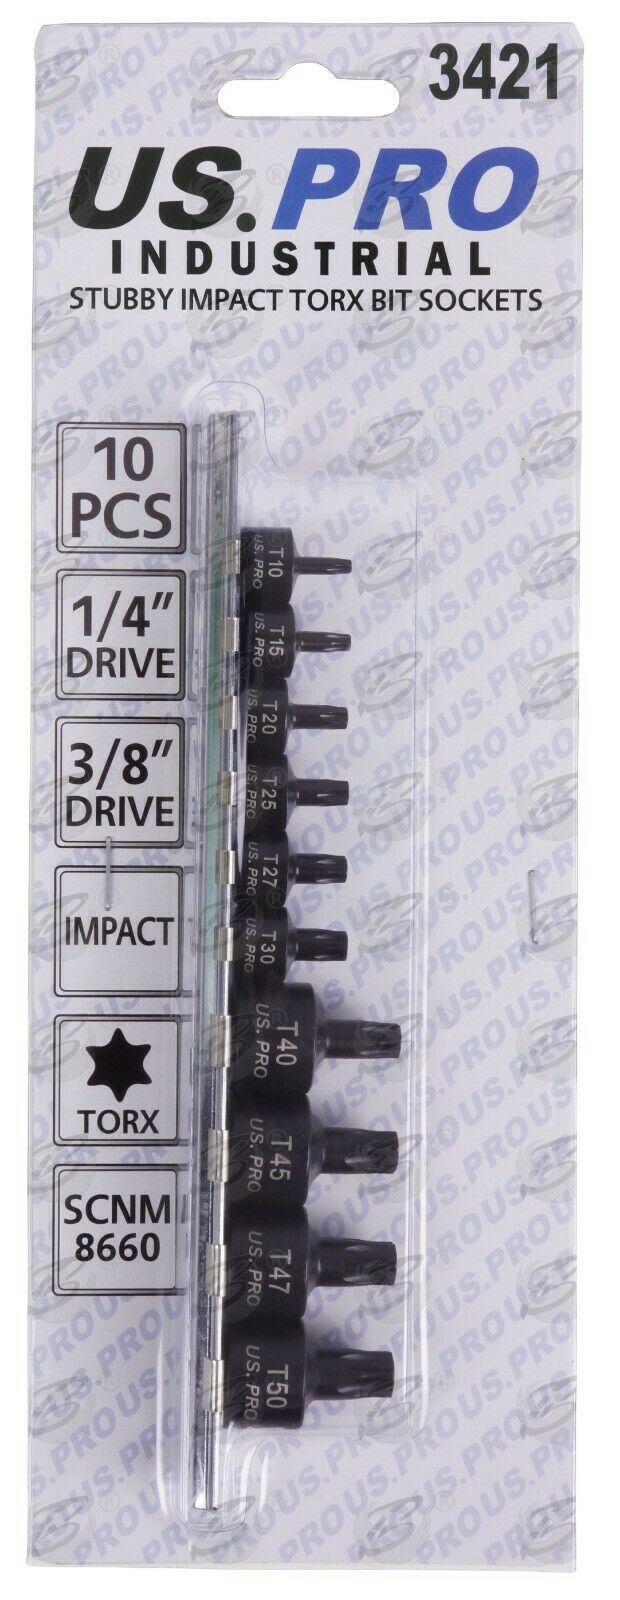 US PRO 10PCS 1/4" & 3/8" DRIVE STUBBY IMPACT TORX BIT SOCKETS T10 - T50